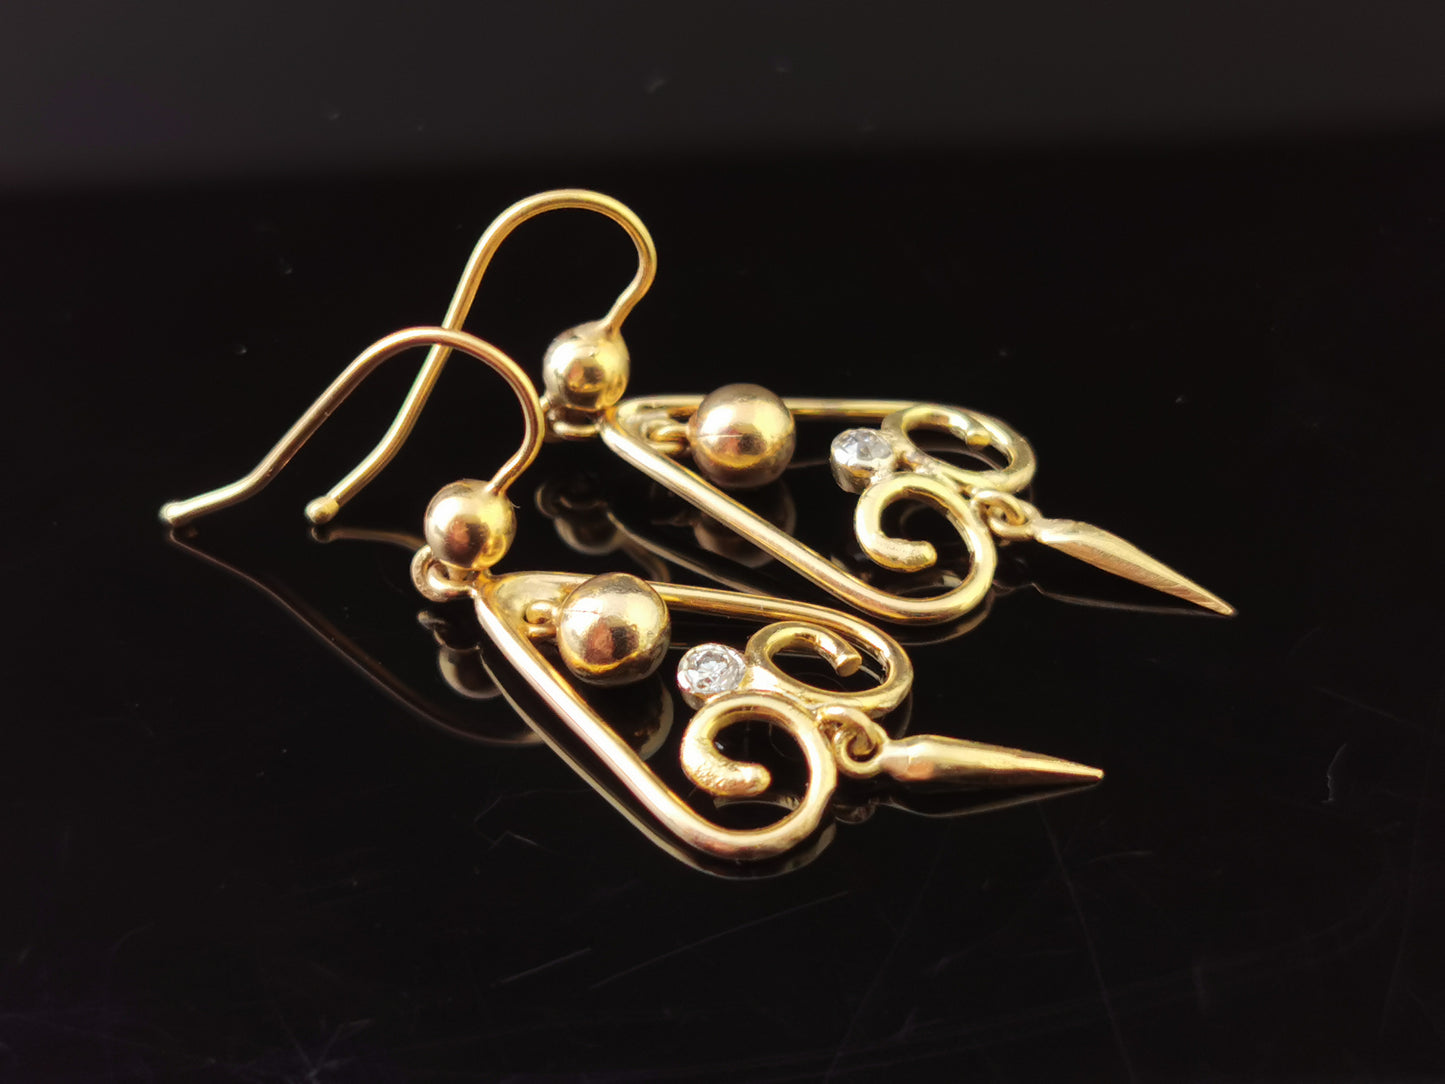 Antique Victorian diamond drop earrings, 15ct gold